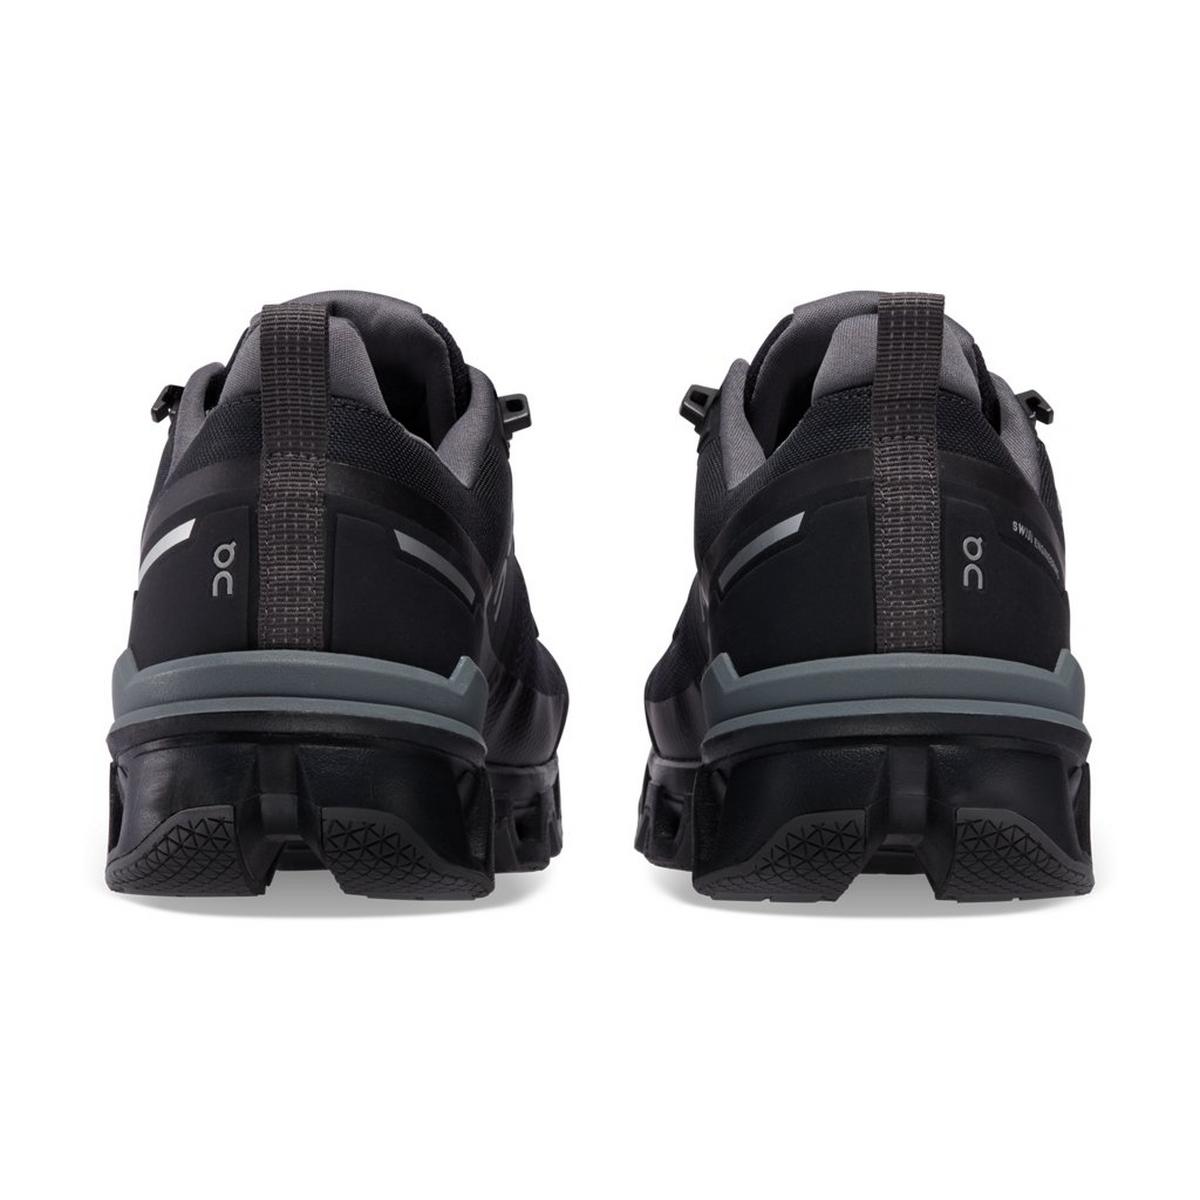 On Men's Cloudwander Waterproof Hiking Shoes - Black